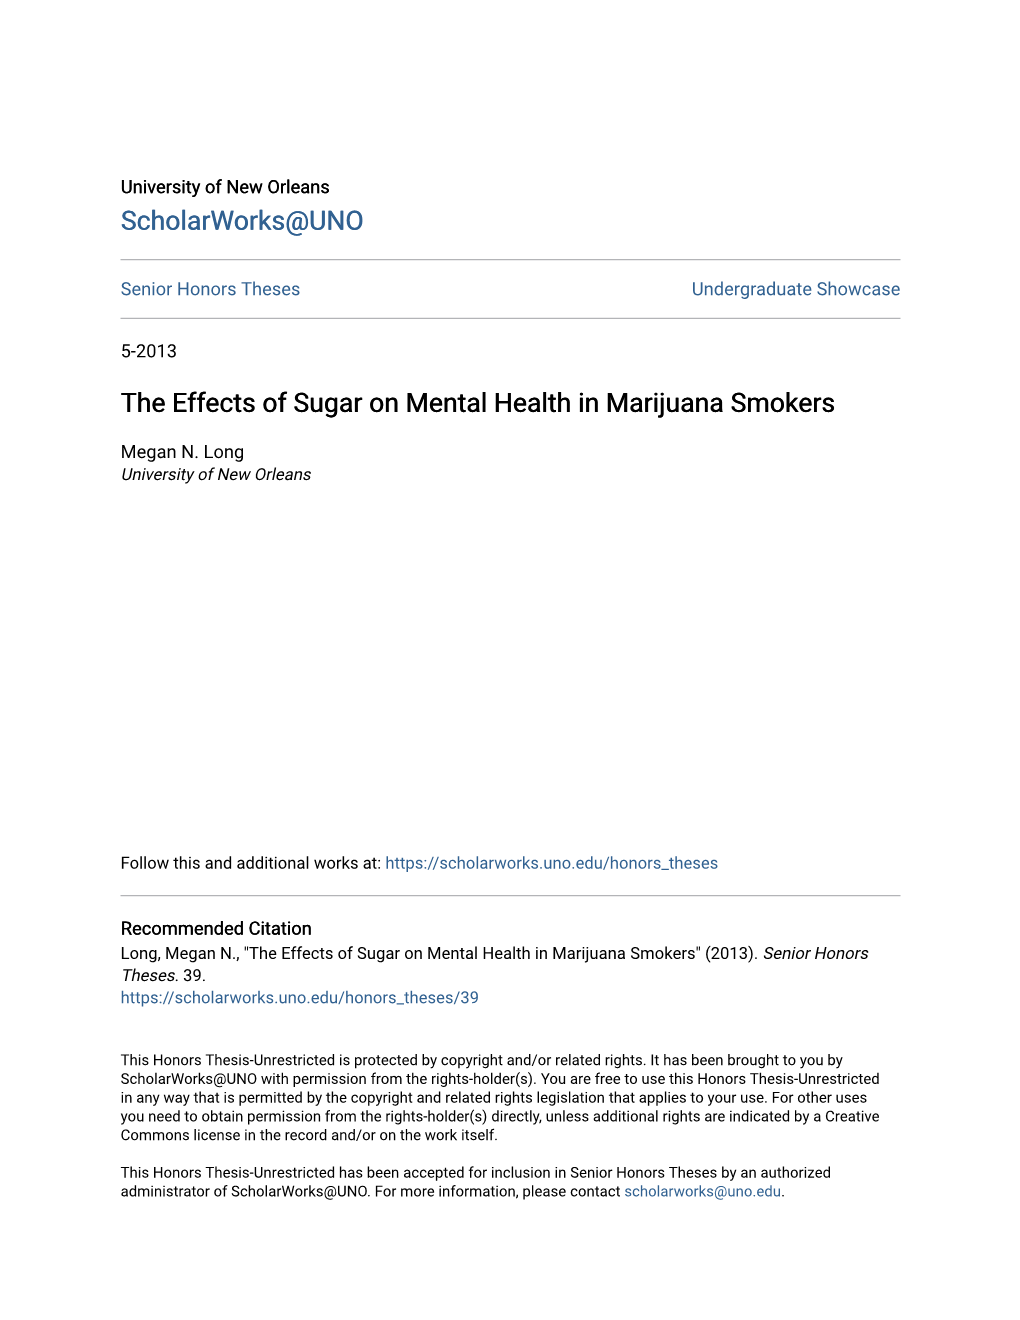 The Effects of Sugar on Mental Health in Marijuana Smokers